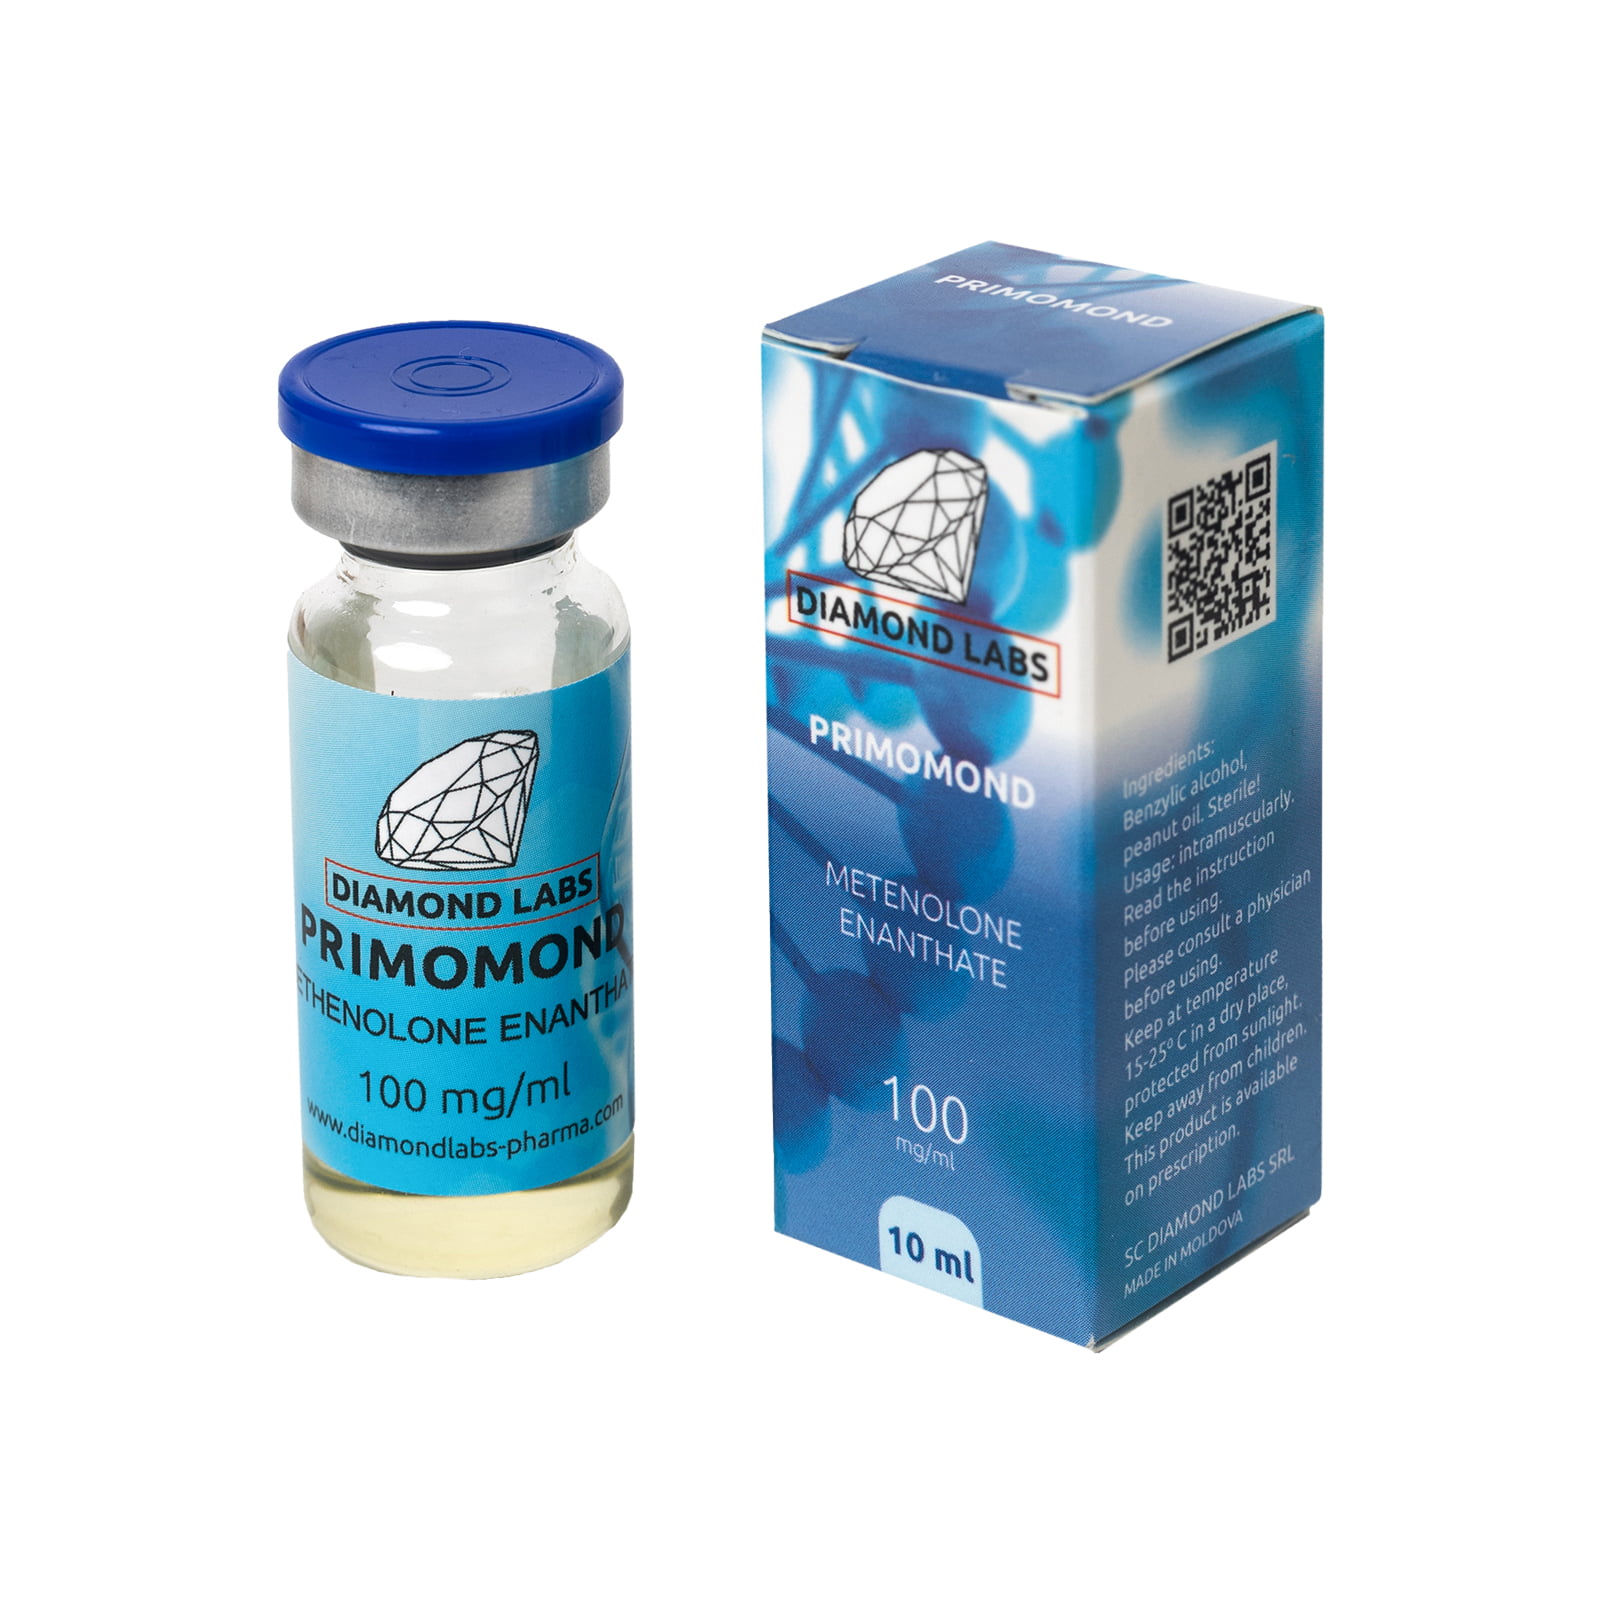 PRIMOMOND metenolone enanthate